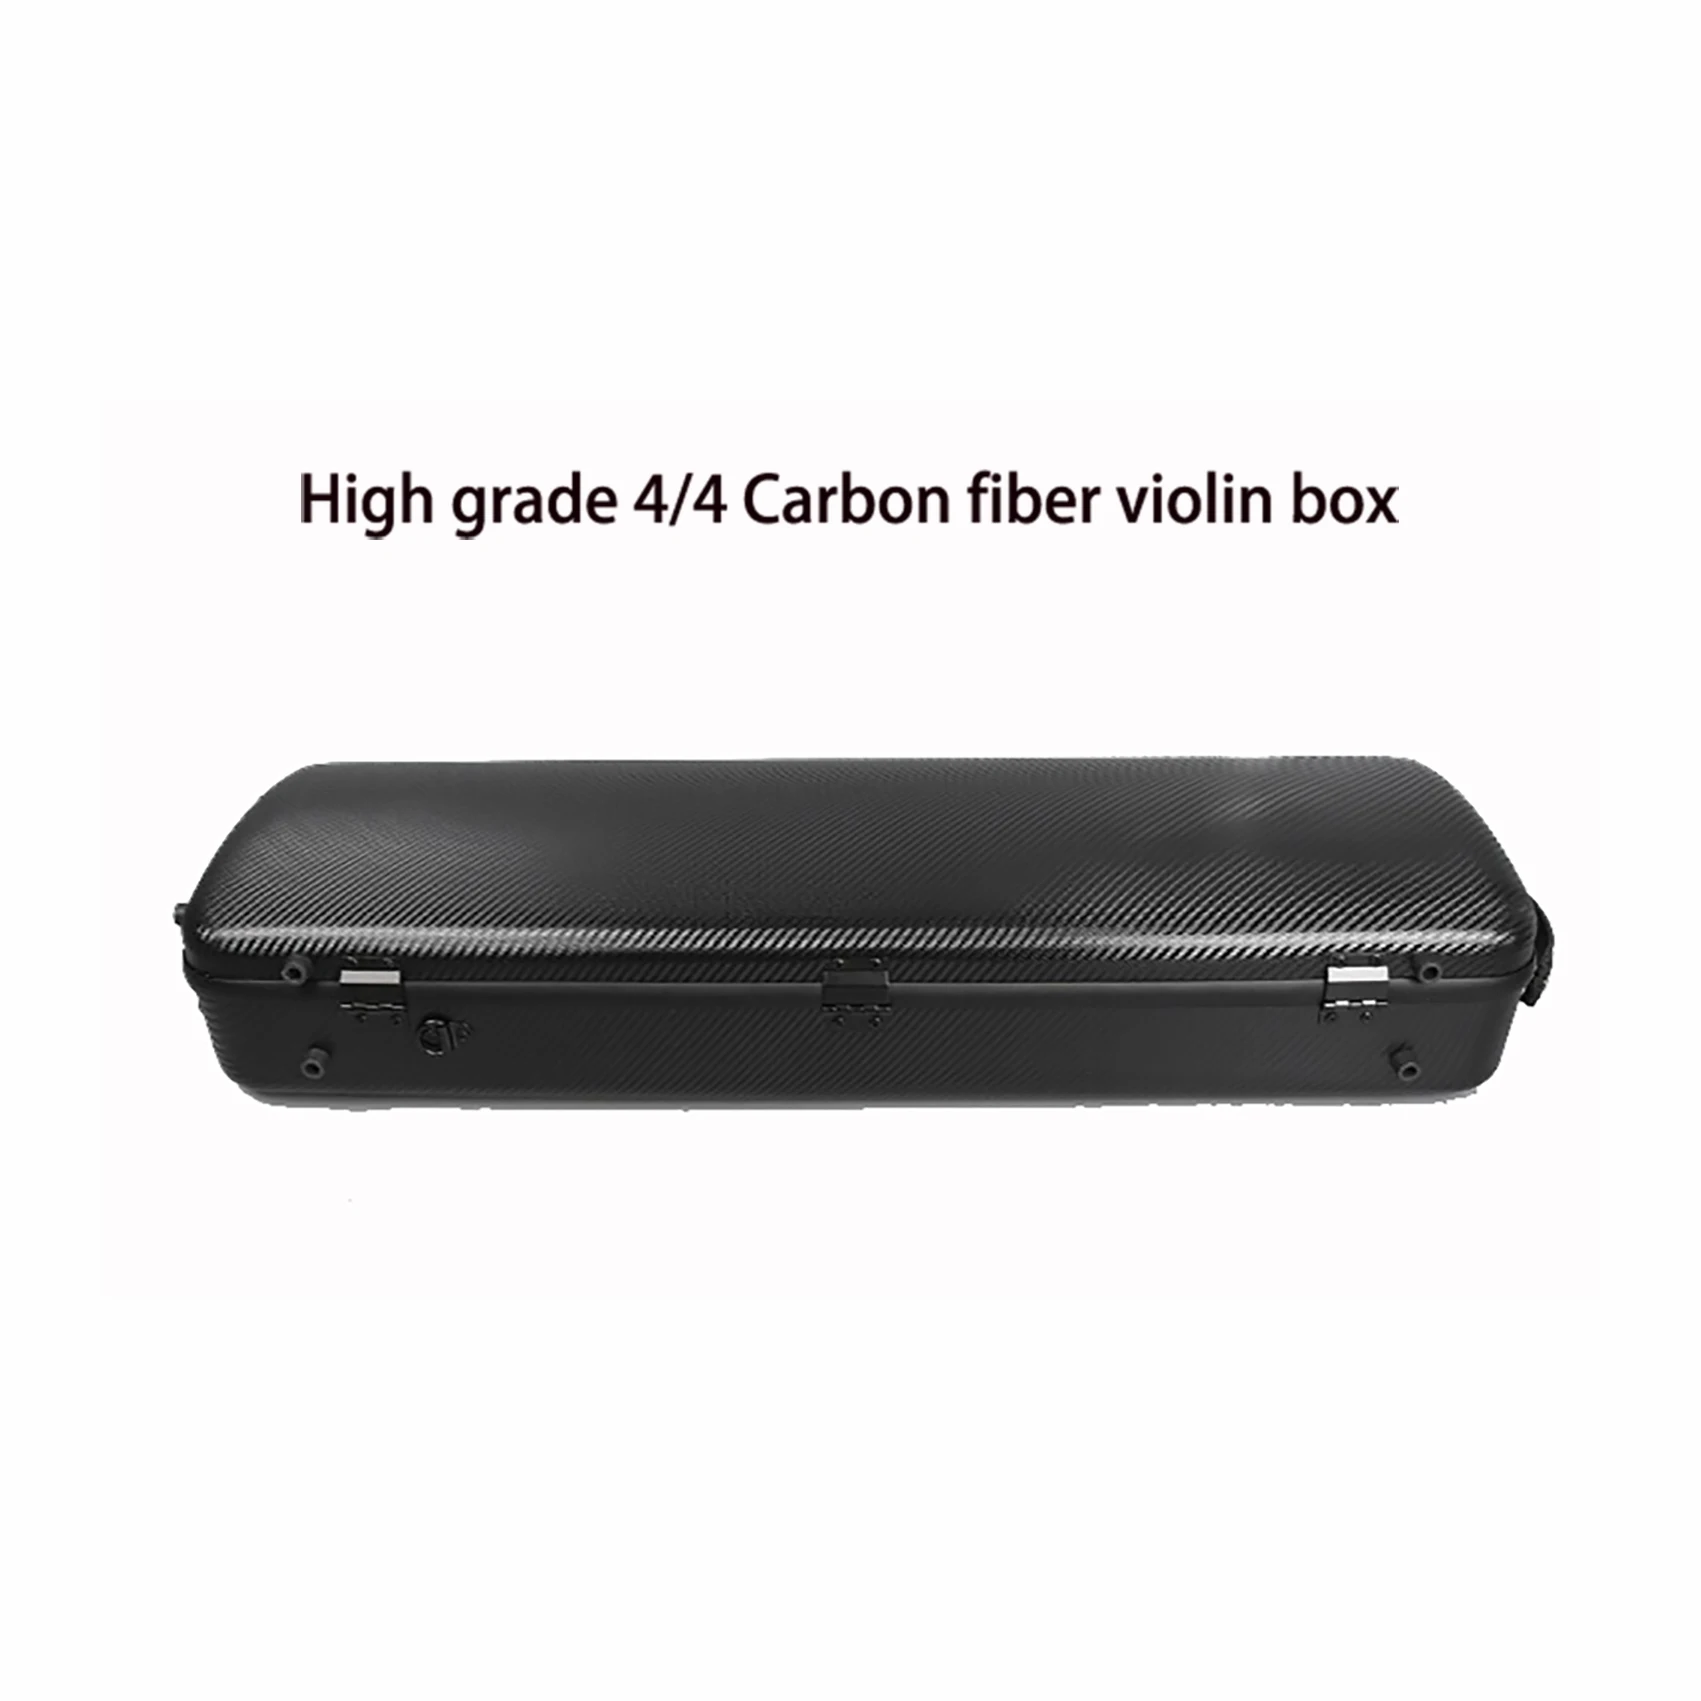 4/4 Violin Case Carbon Fiber Violin Box High Grade Black Square Box Strong Lock with Small bag